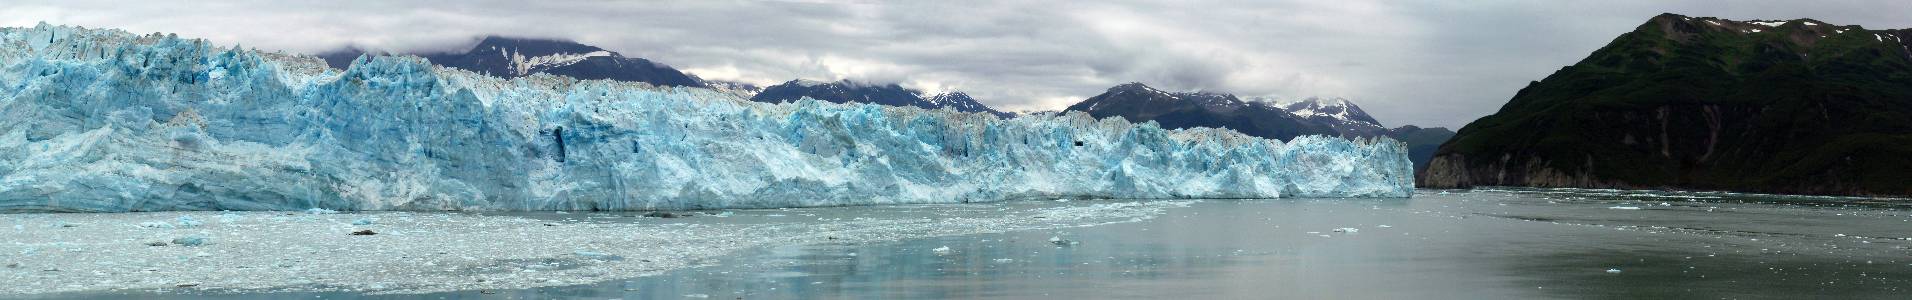 Name: Hubbard Glacier Stitch Camera make: NA   Model: NA   Software: 